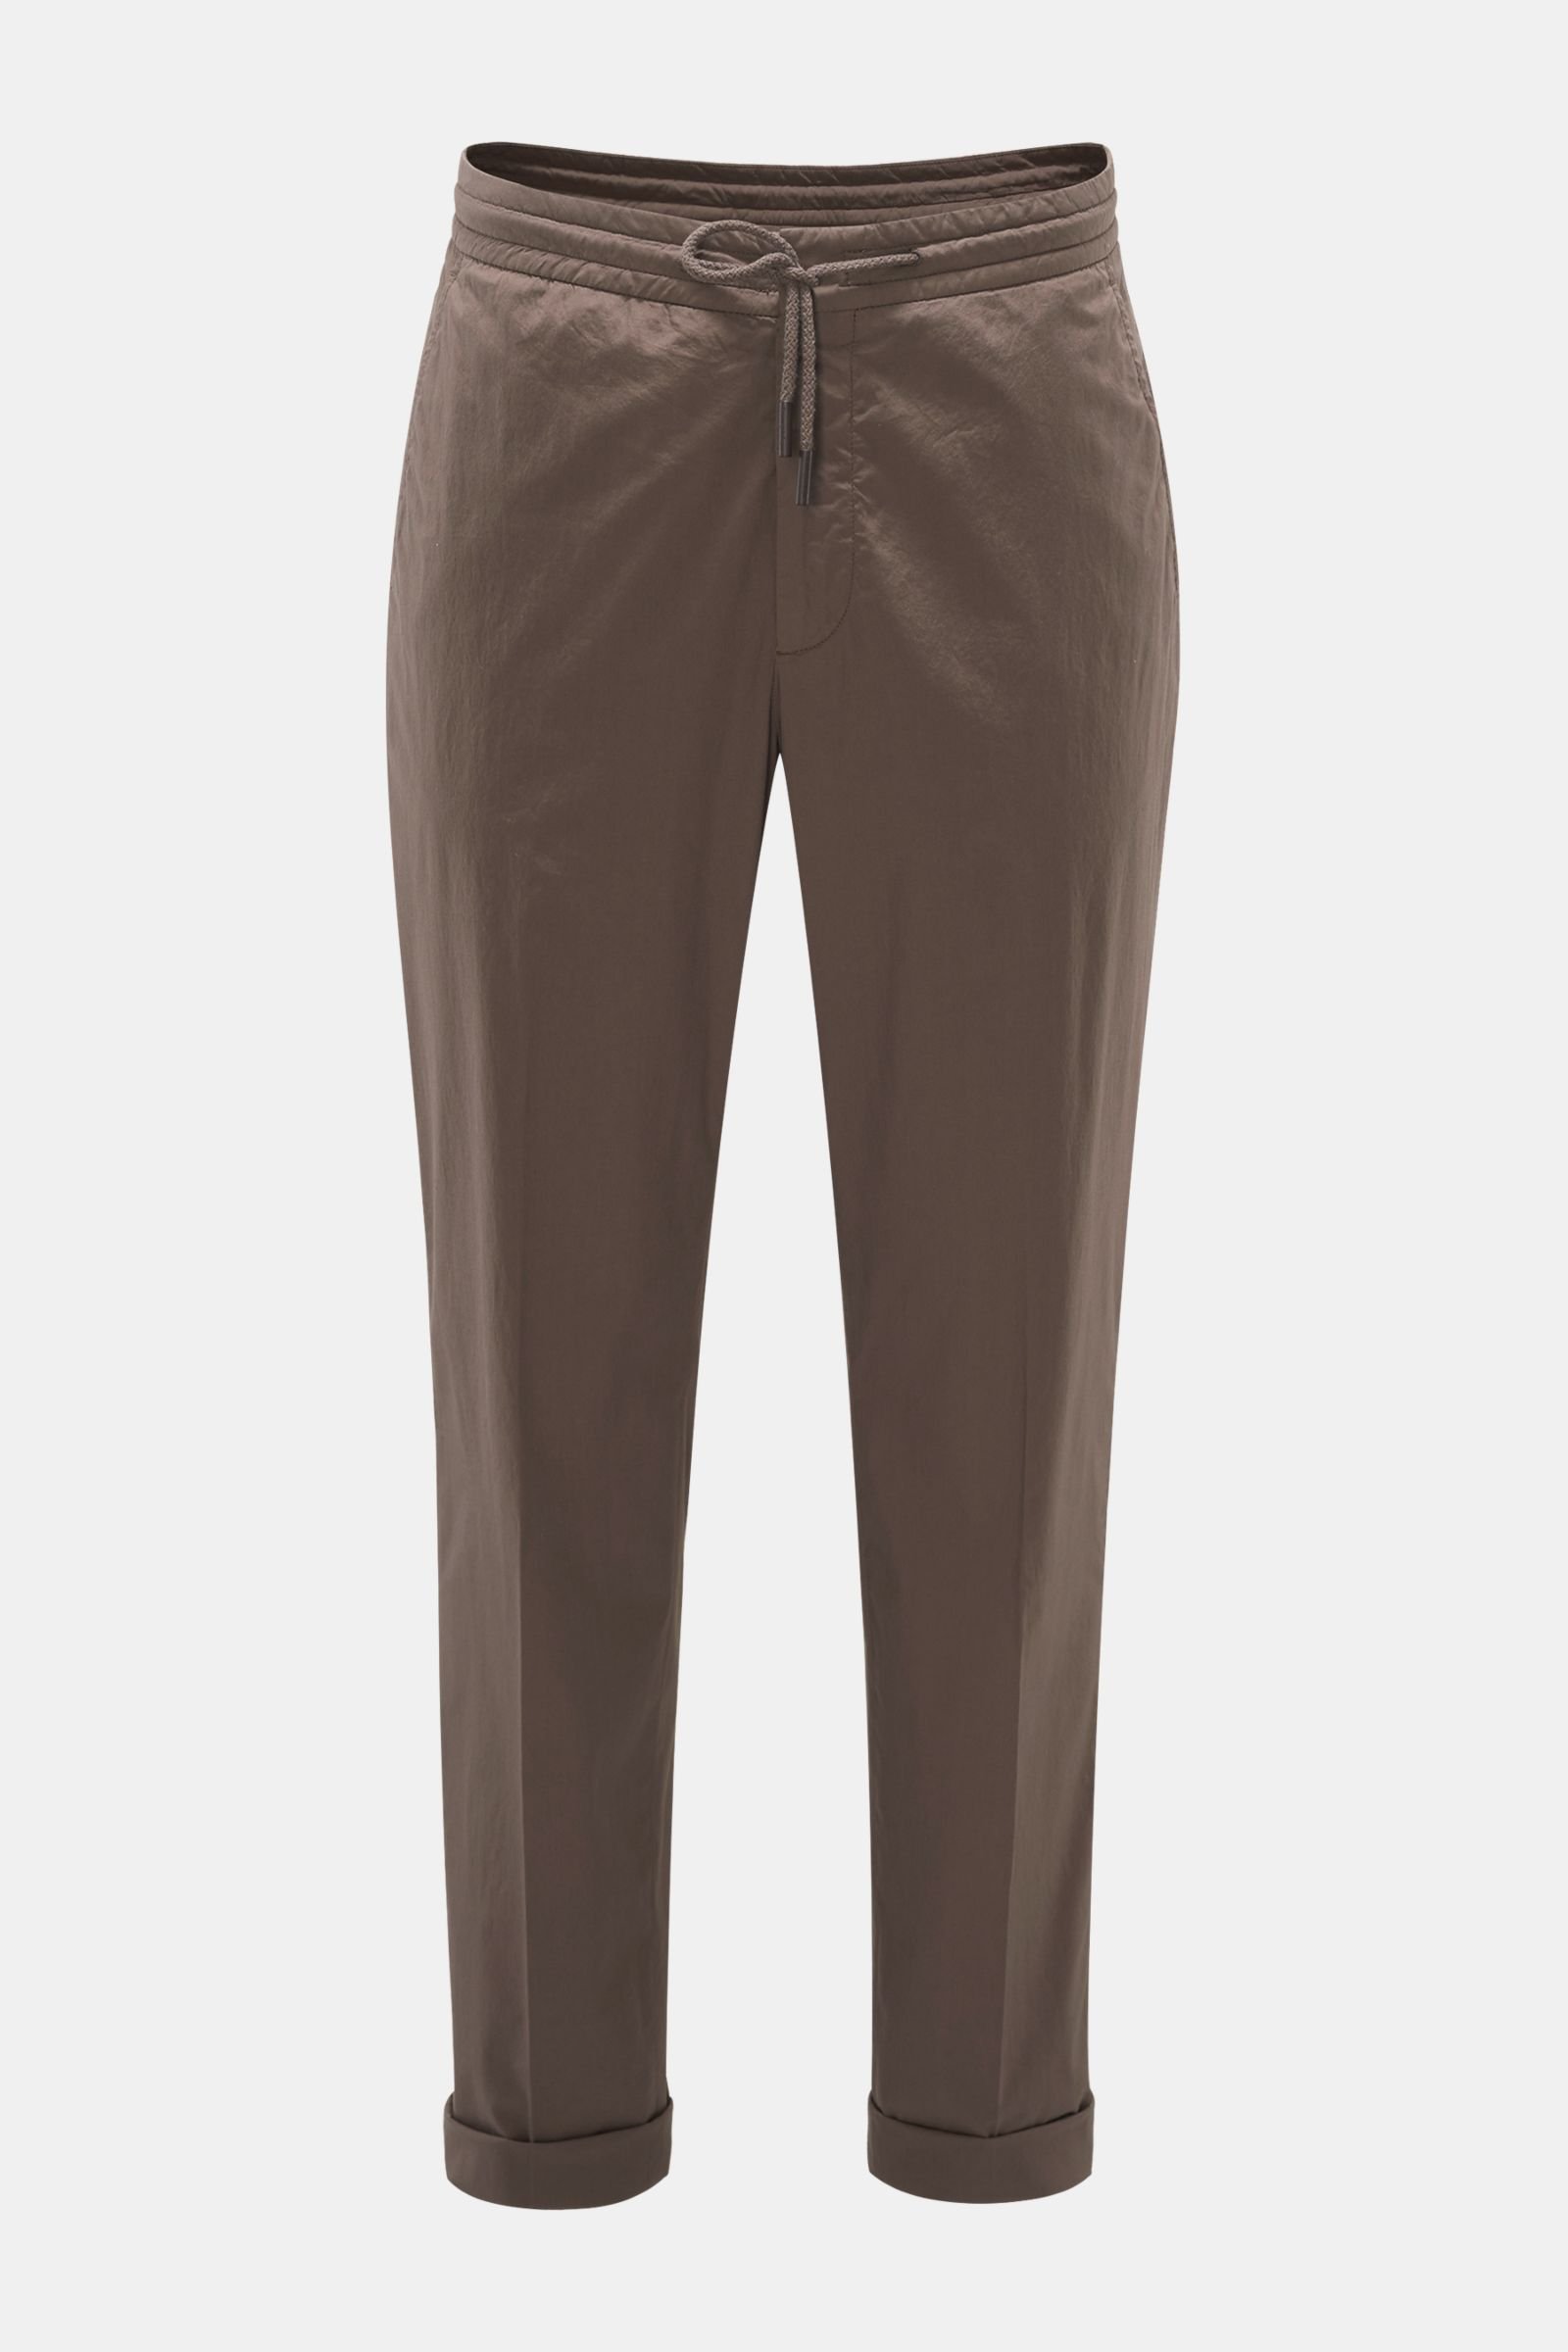 Jogger pants grey-brown